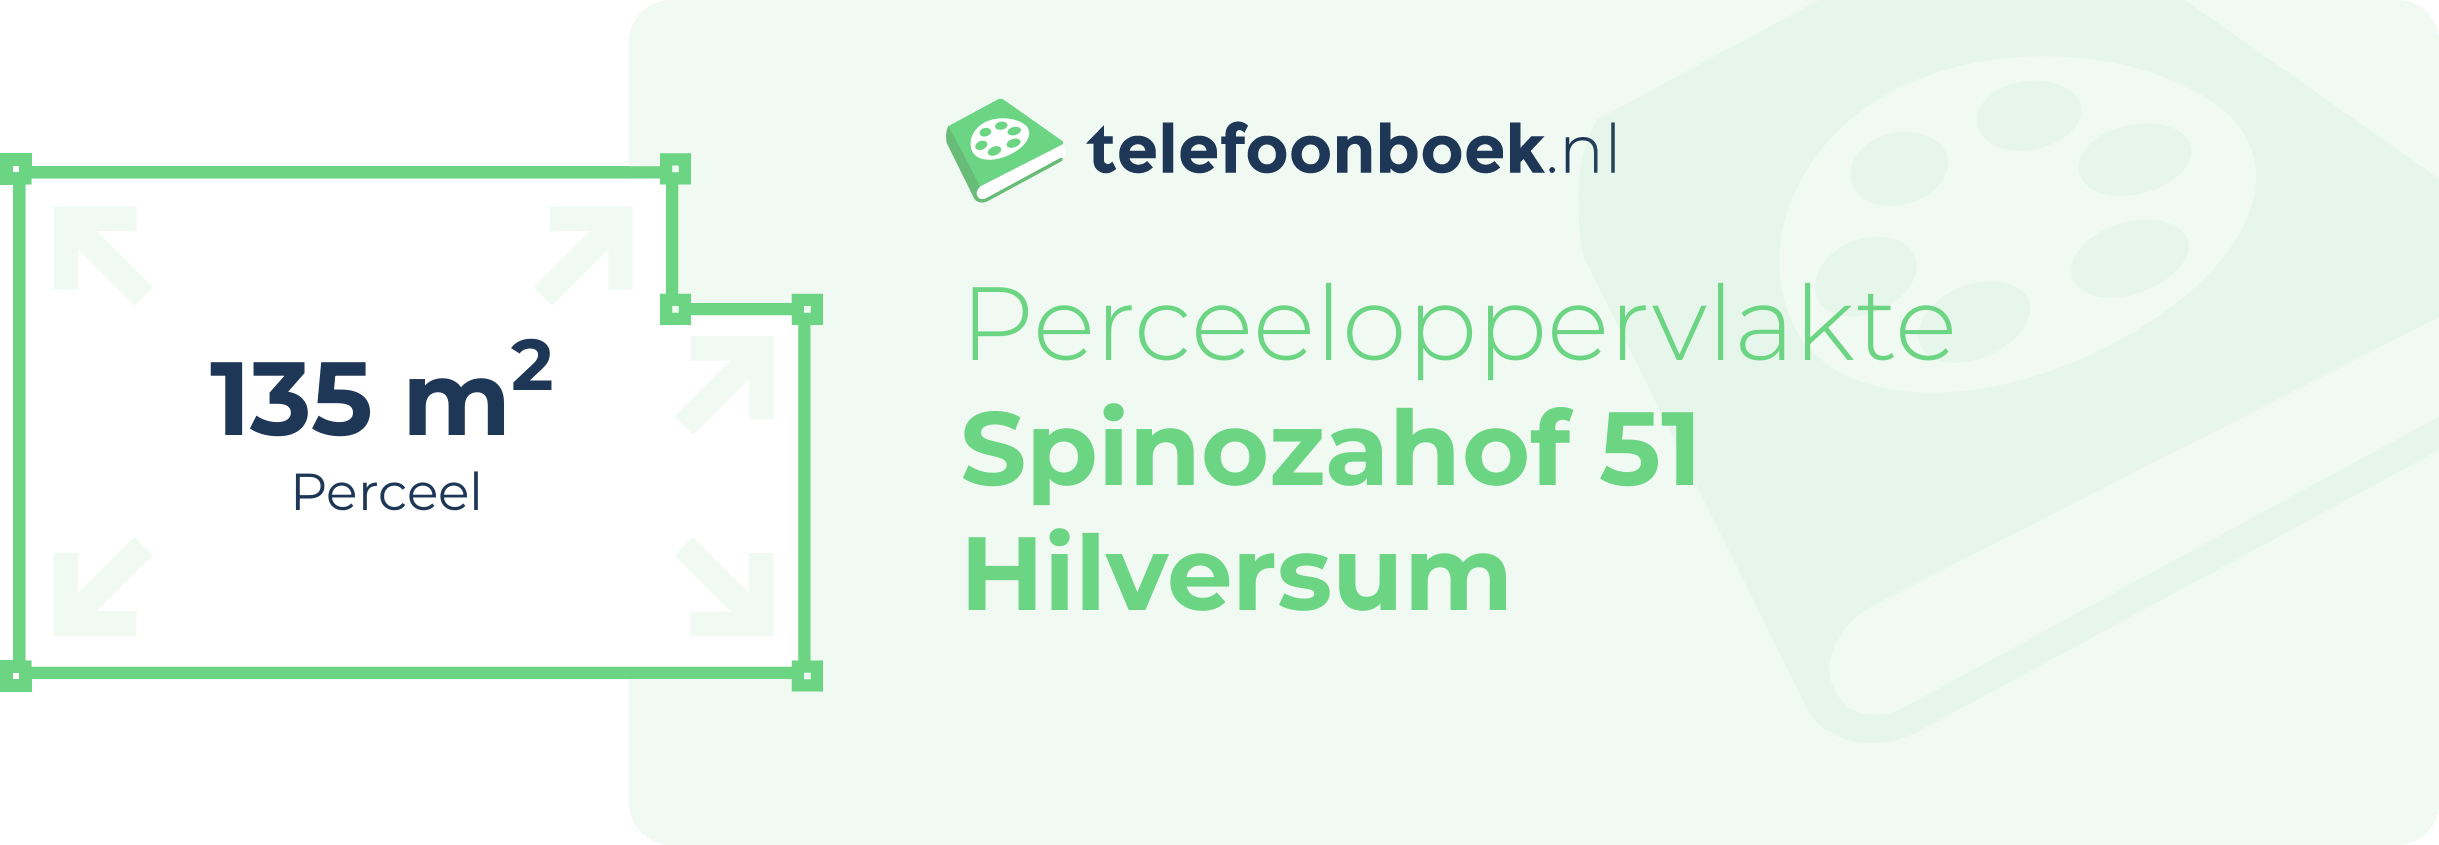 Perceeloppervlakte Spinozahof 51 Hilversum